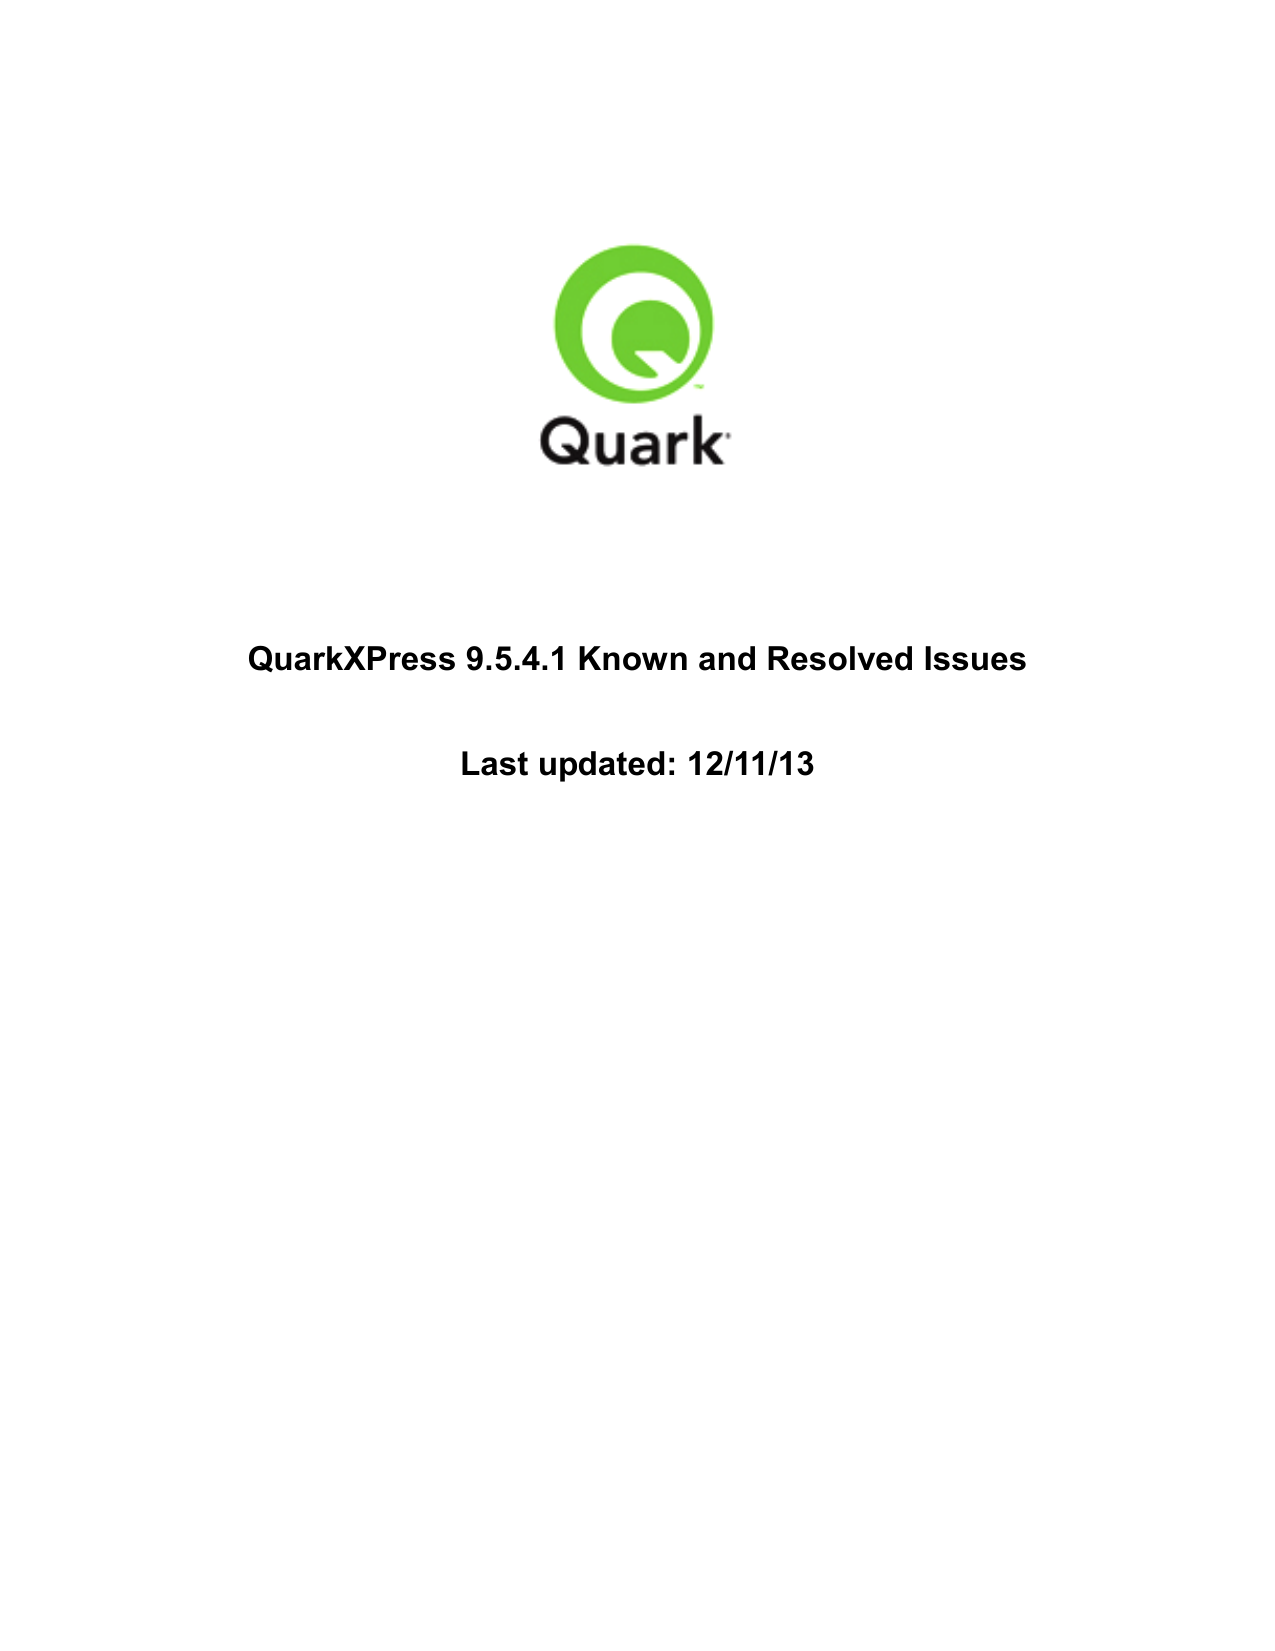 open quarkxpress files